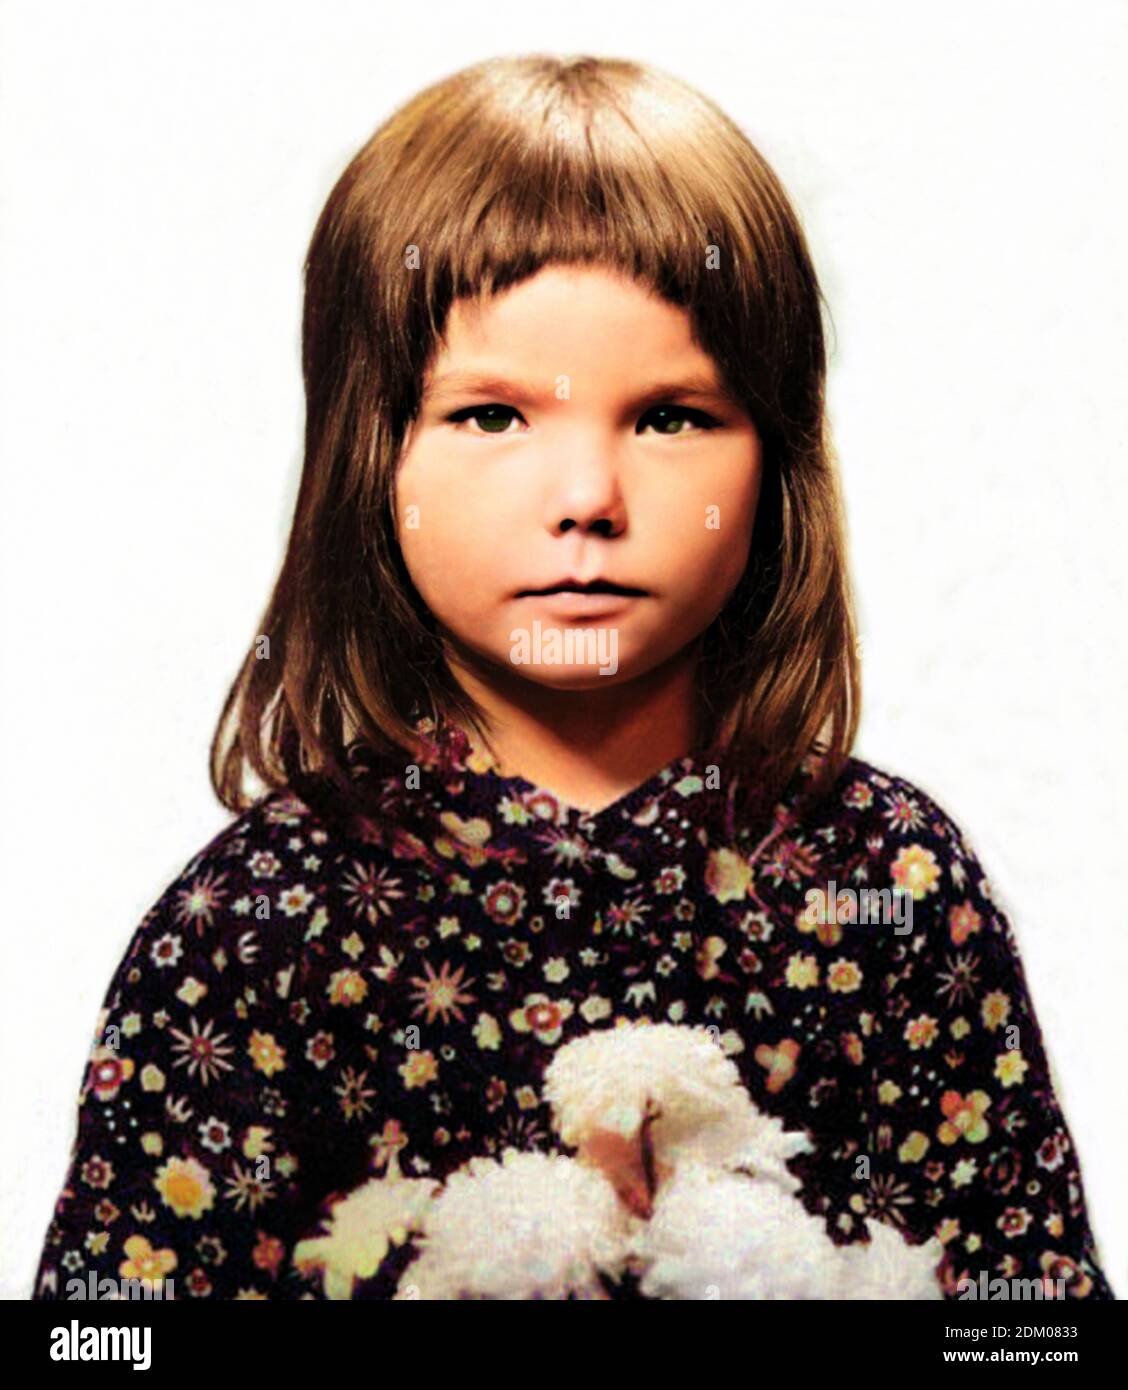 1970 ca, ICELAND : The celebrated icelander Pop singer and composer BJORK Björk Guðmundsdóttir ( born in 1965 ) when was a young girl aged 5 . Unknown photographer. DIGITALLY COLORIZED . - HISTORY - FOTO STORICHE - personalità da bambino bambini da giovane - personality personalities when was young - INFANZIA - CHILDHOOD - BAMBINO - BAMBINA - BABY - BAMBINI - CHILDREN - CHILD - POP MUSIC - MUSICA - cantante - COMPOSITORE --- ARCHIVIO GBB Stock Photo